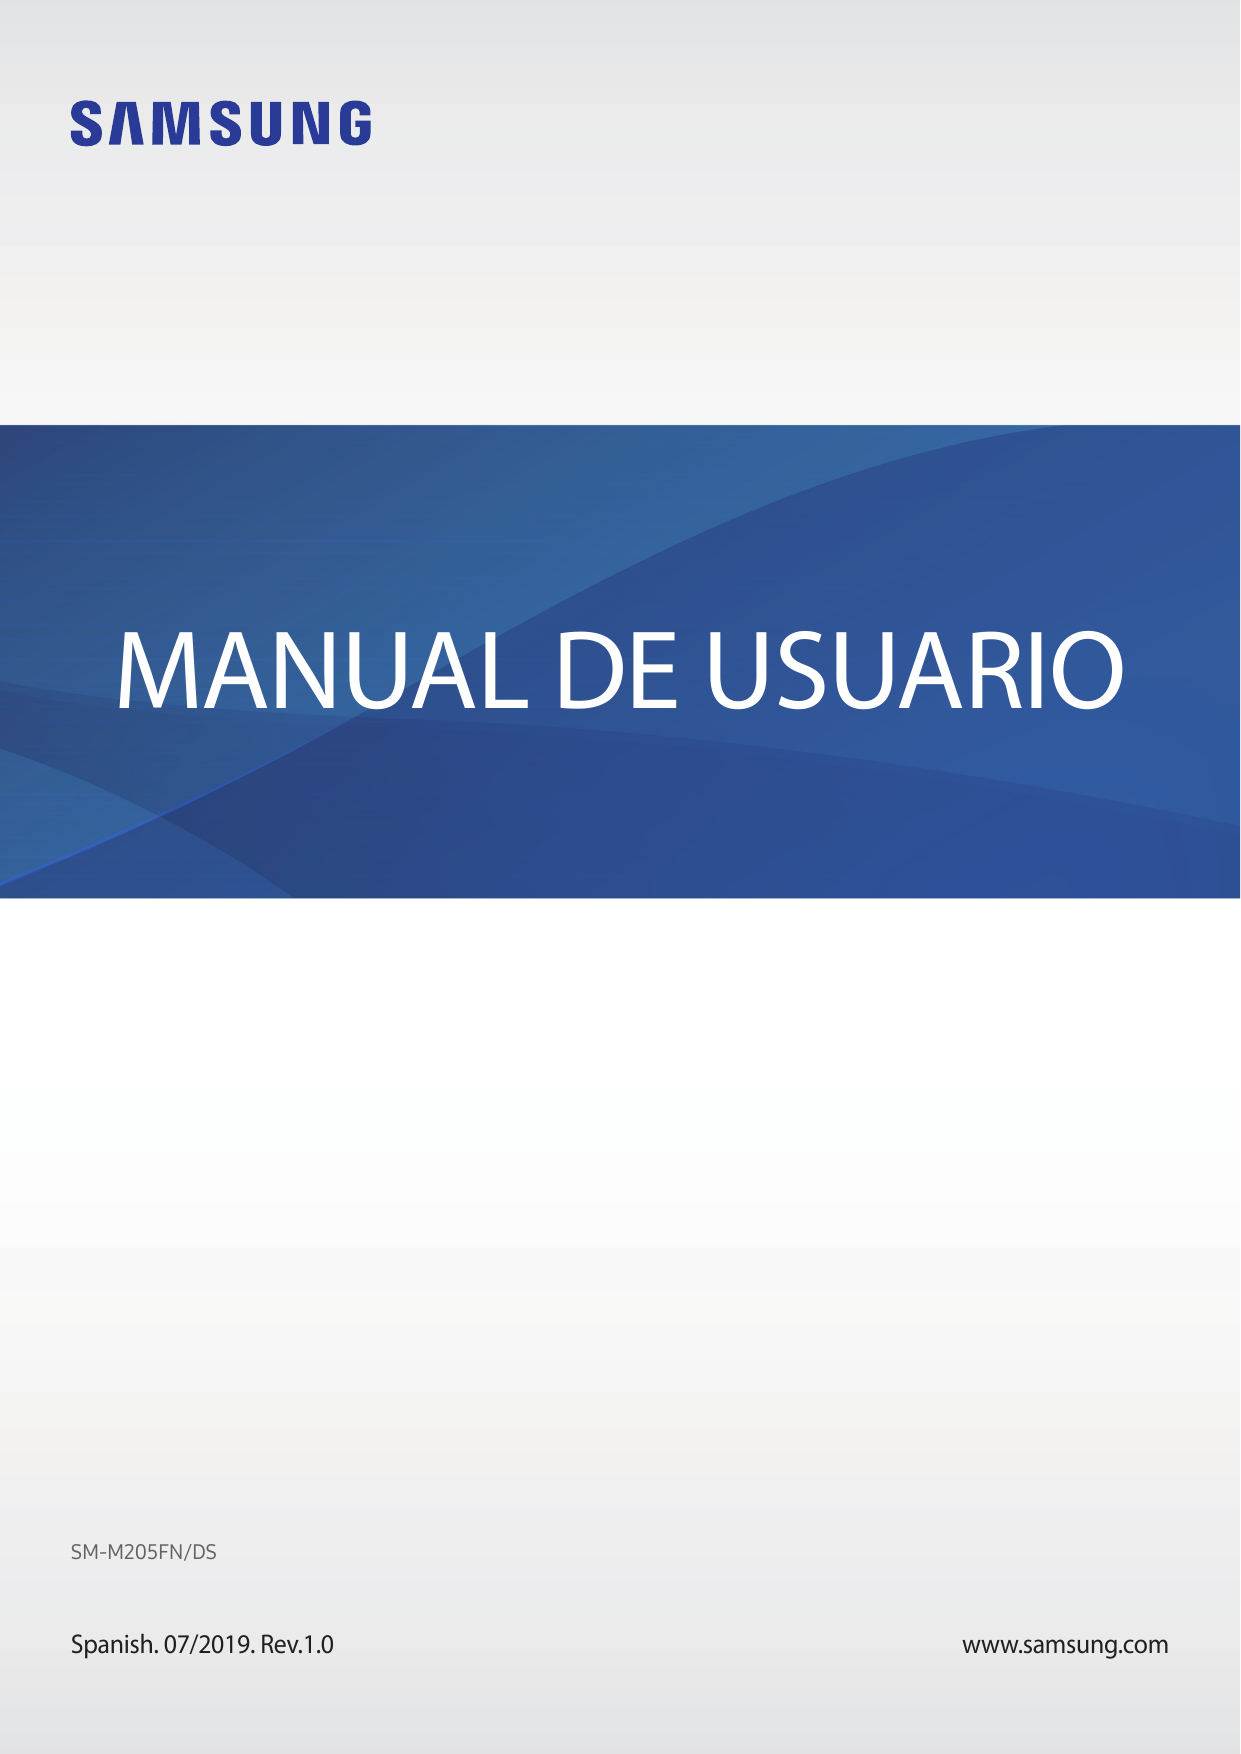 MANUAL DE USUARIOSM-M205FN/DSSpanish. 07/2019. Rev.1.0www.samsung.com